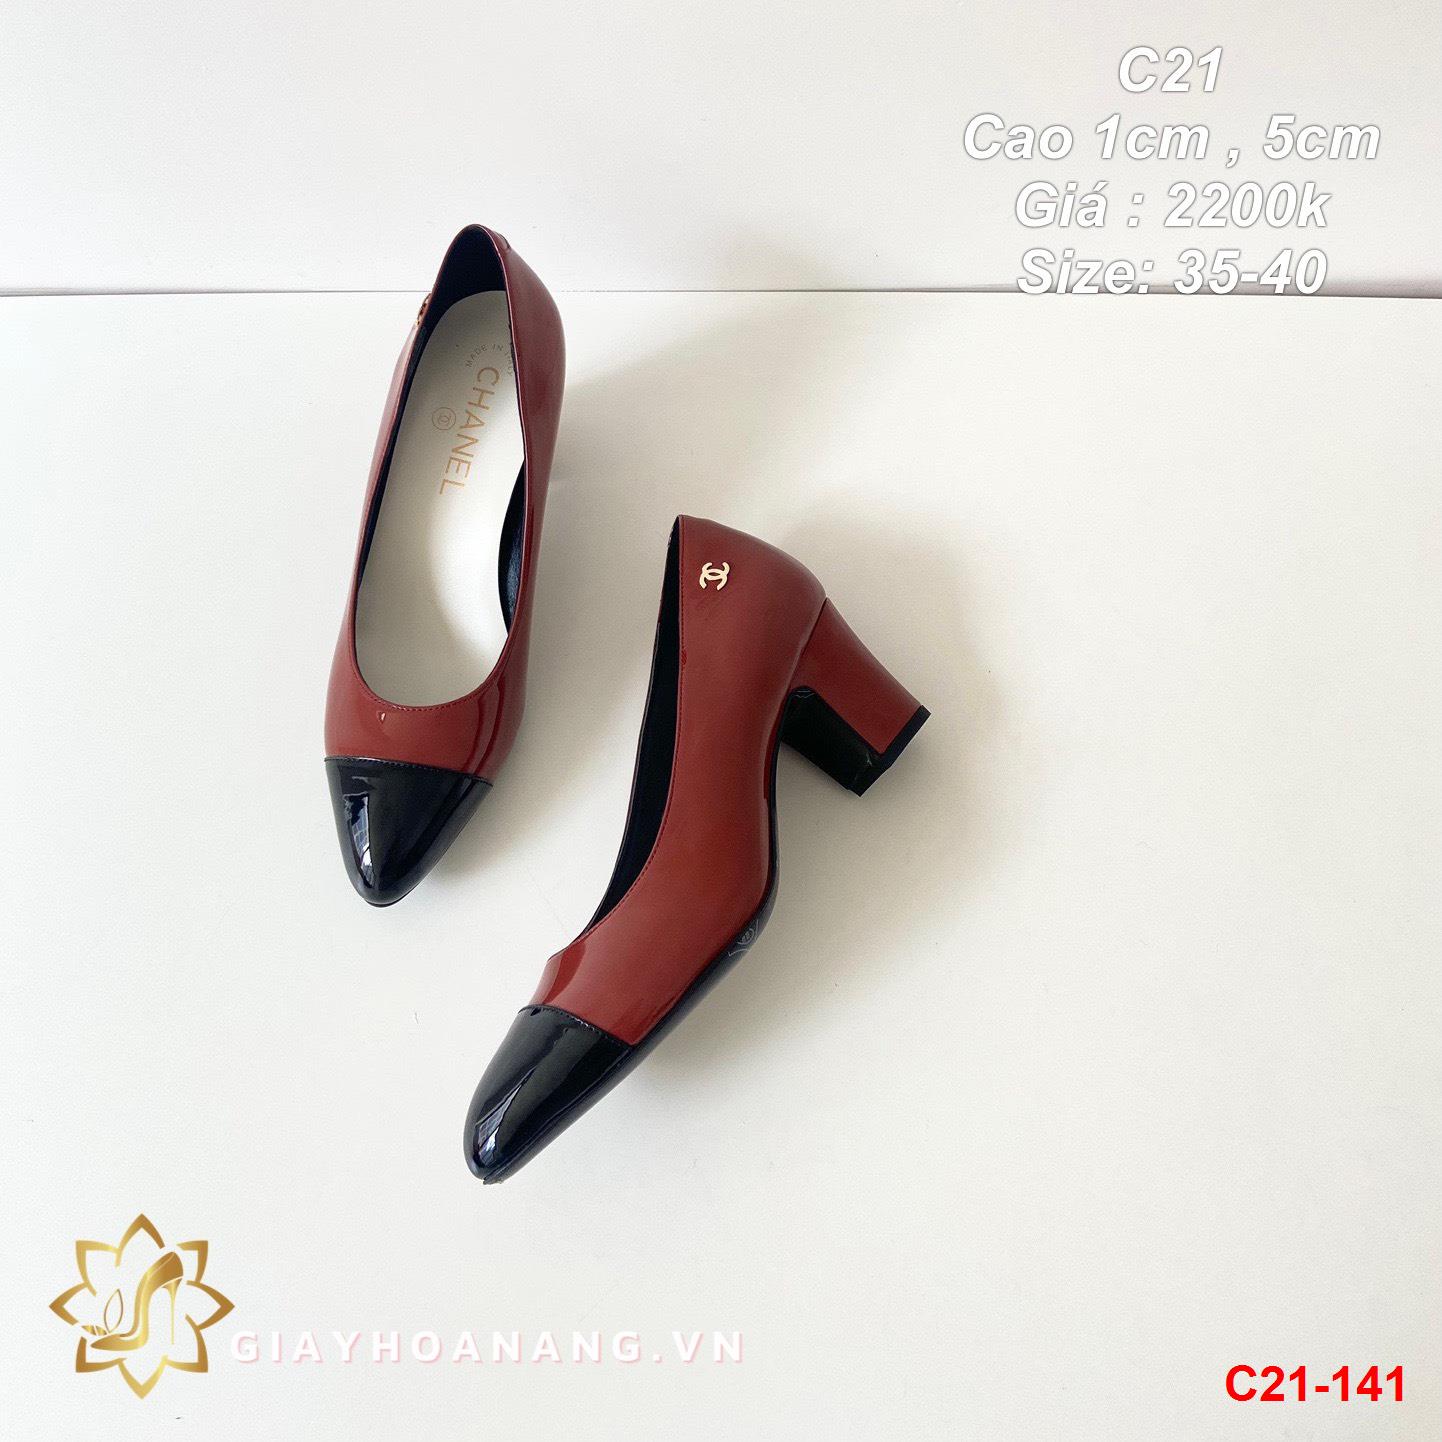 C21-141 Chanel giày cao 1cm , 5cm siêu cấp